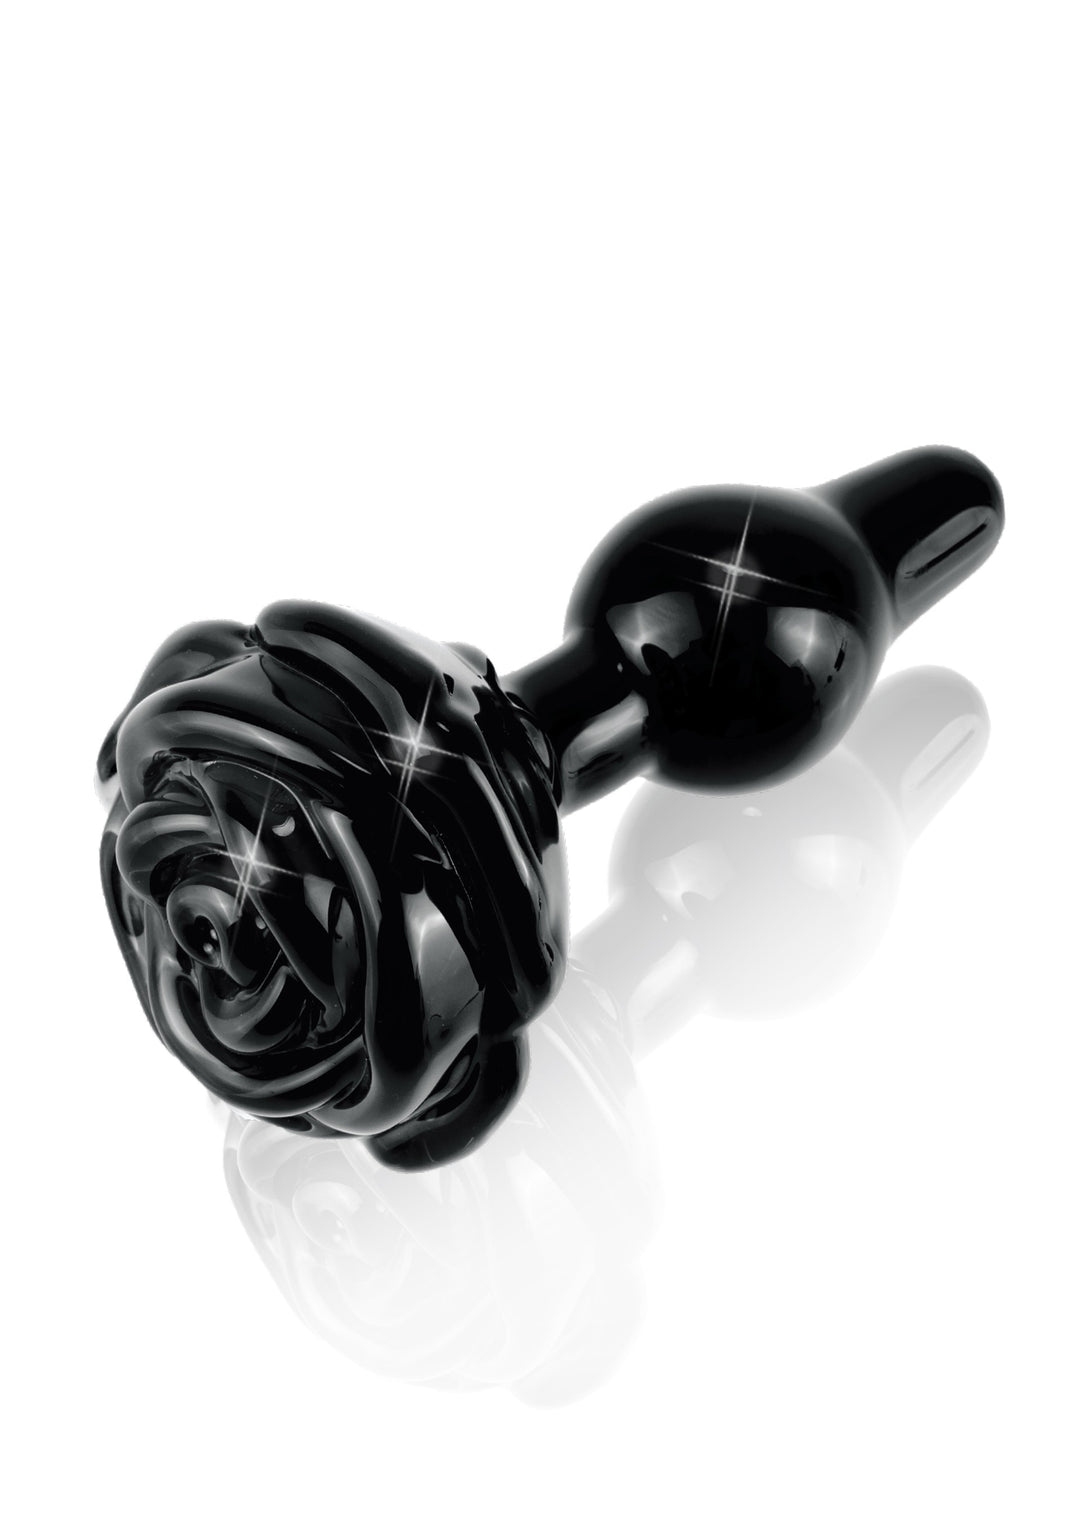 Butt plug in vetro Black Rose No. 77 - 9,5cm